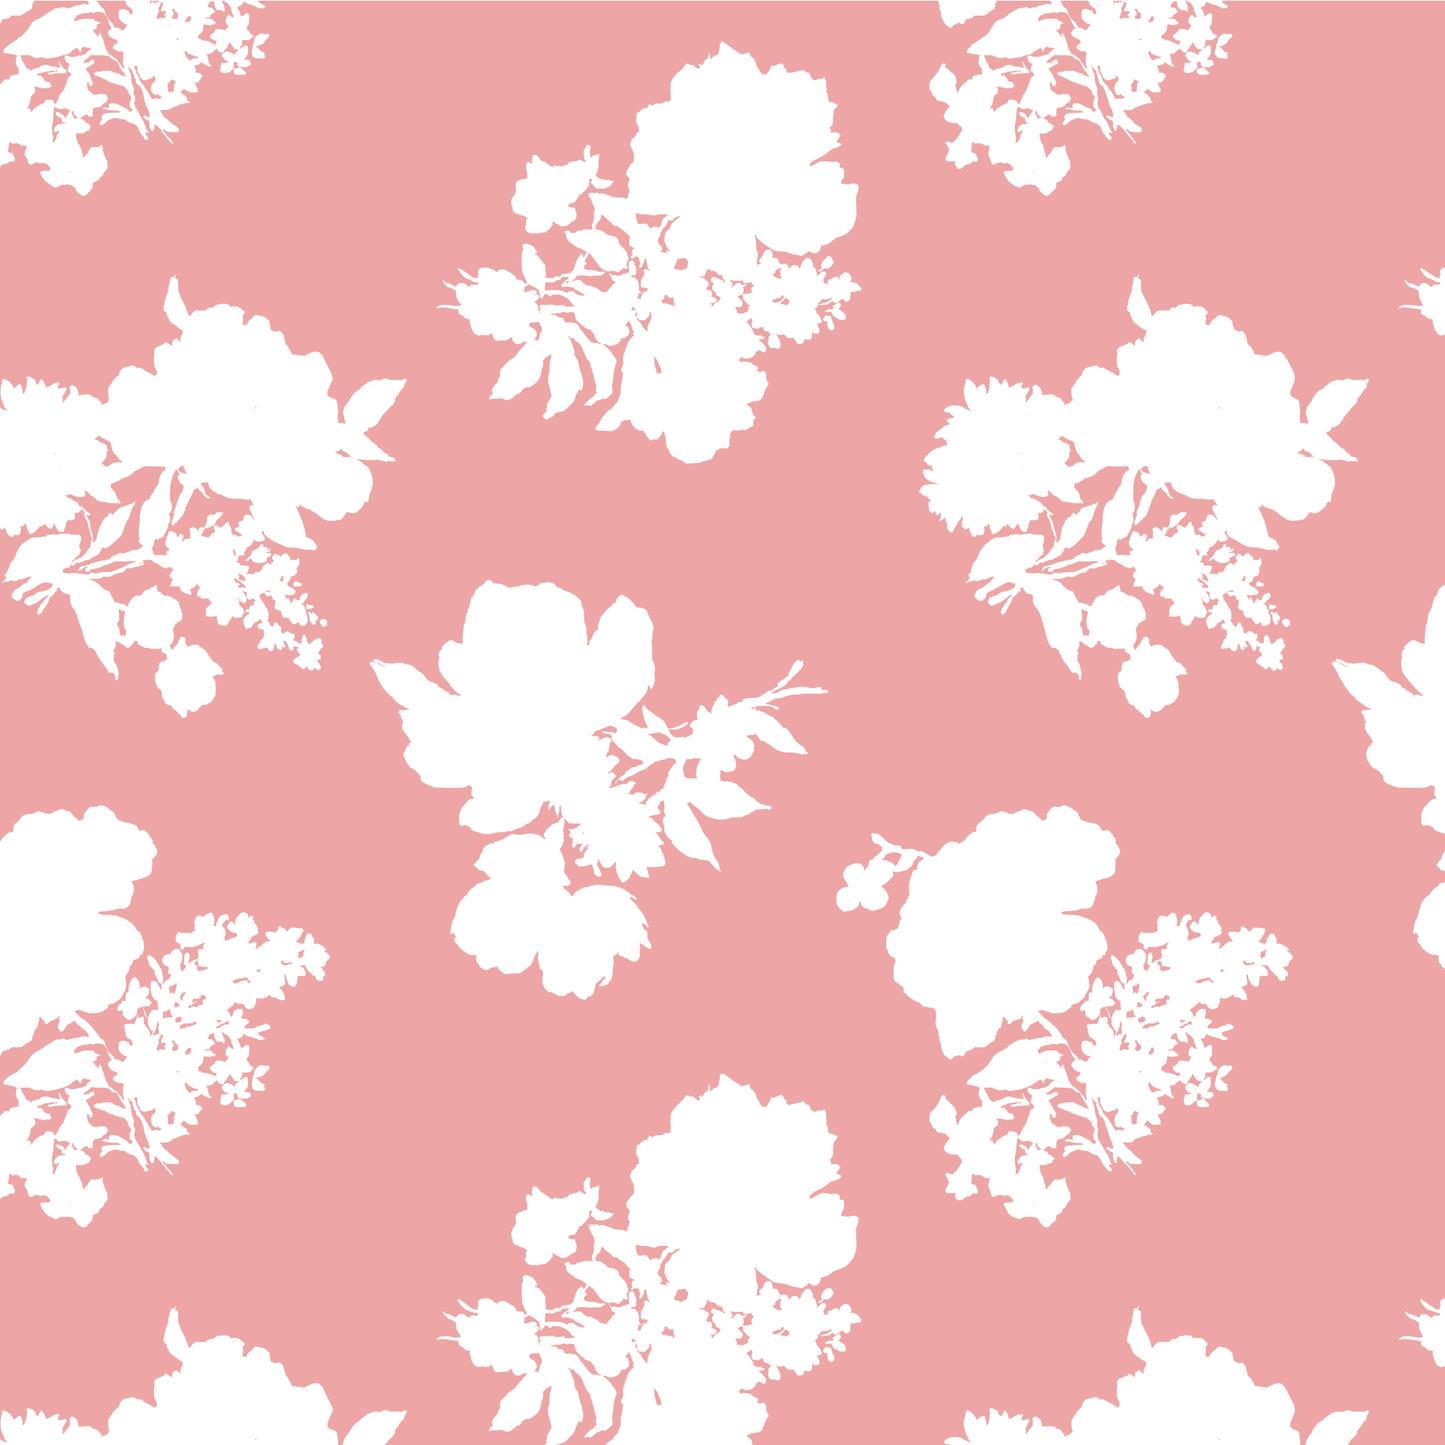 Swans Island Silhouette Southampton Pink Fabric Sample